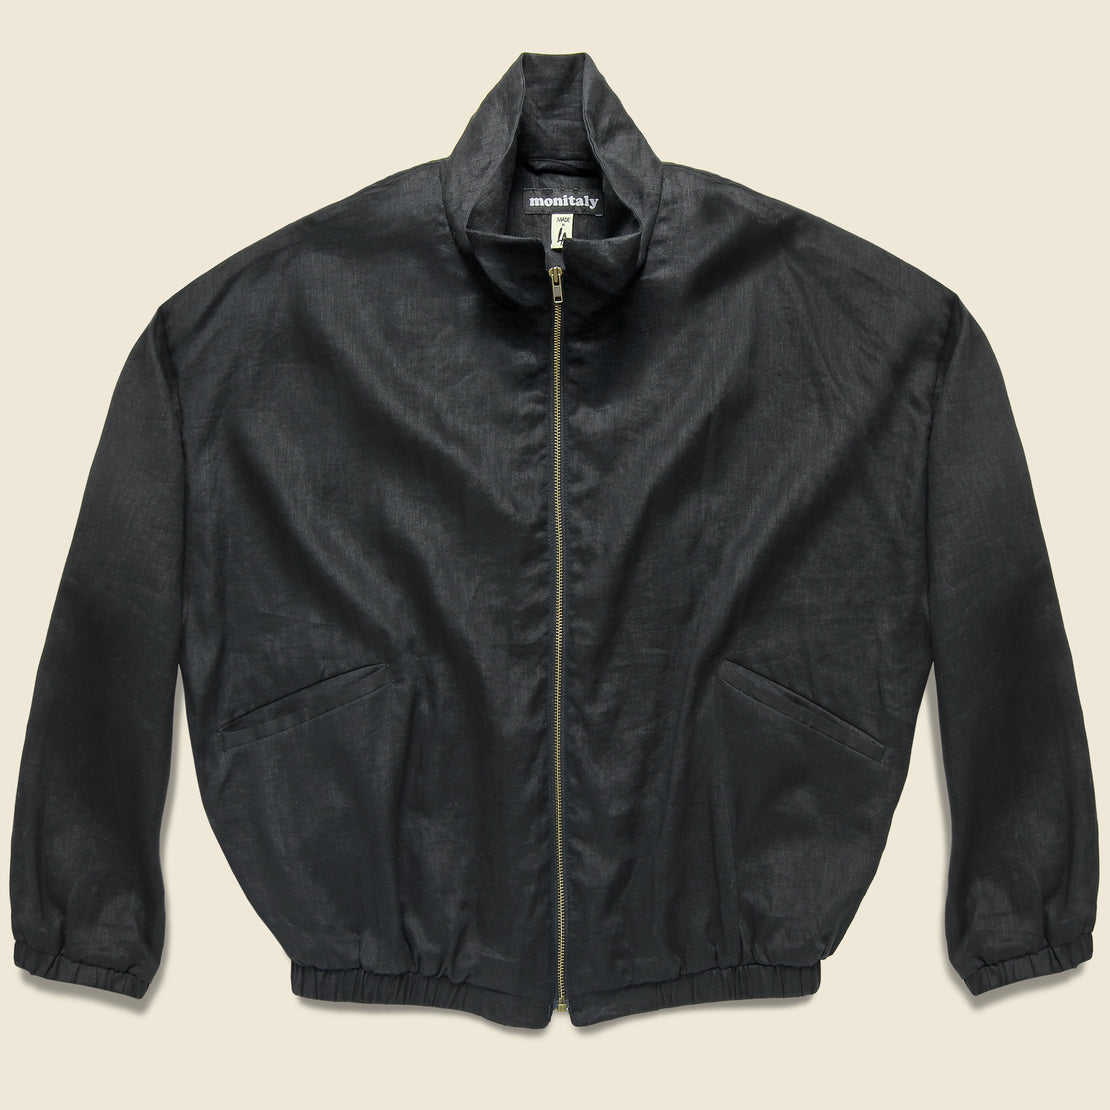 Monitaly Old Dog Linen Blouson Jacket - Black